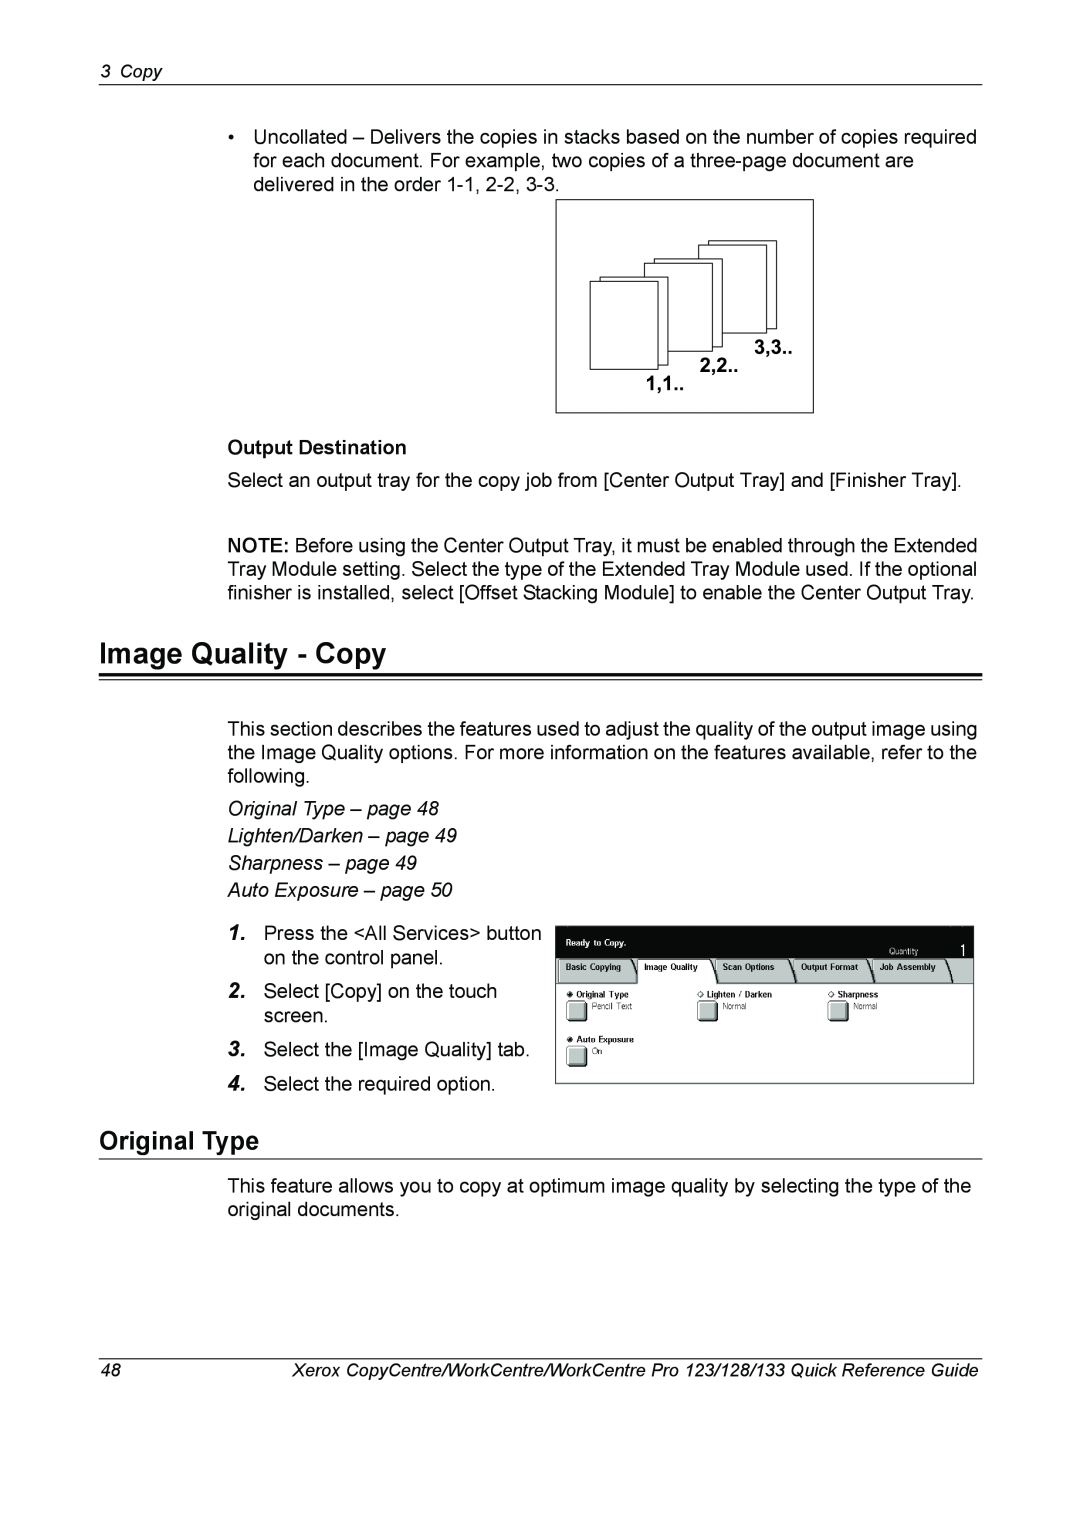 Xerox 604P18037 manual Image Quality - Copy, Original Type, Output Destination, Auto Exposure - page 